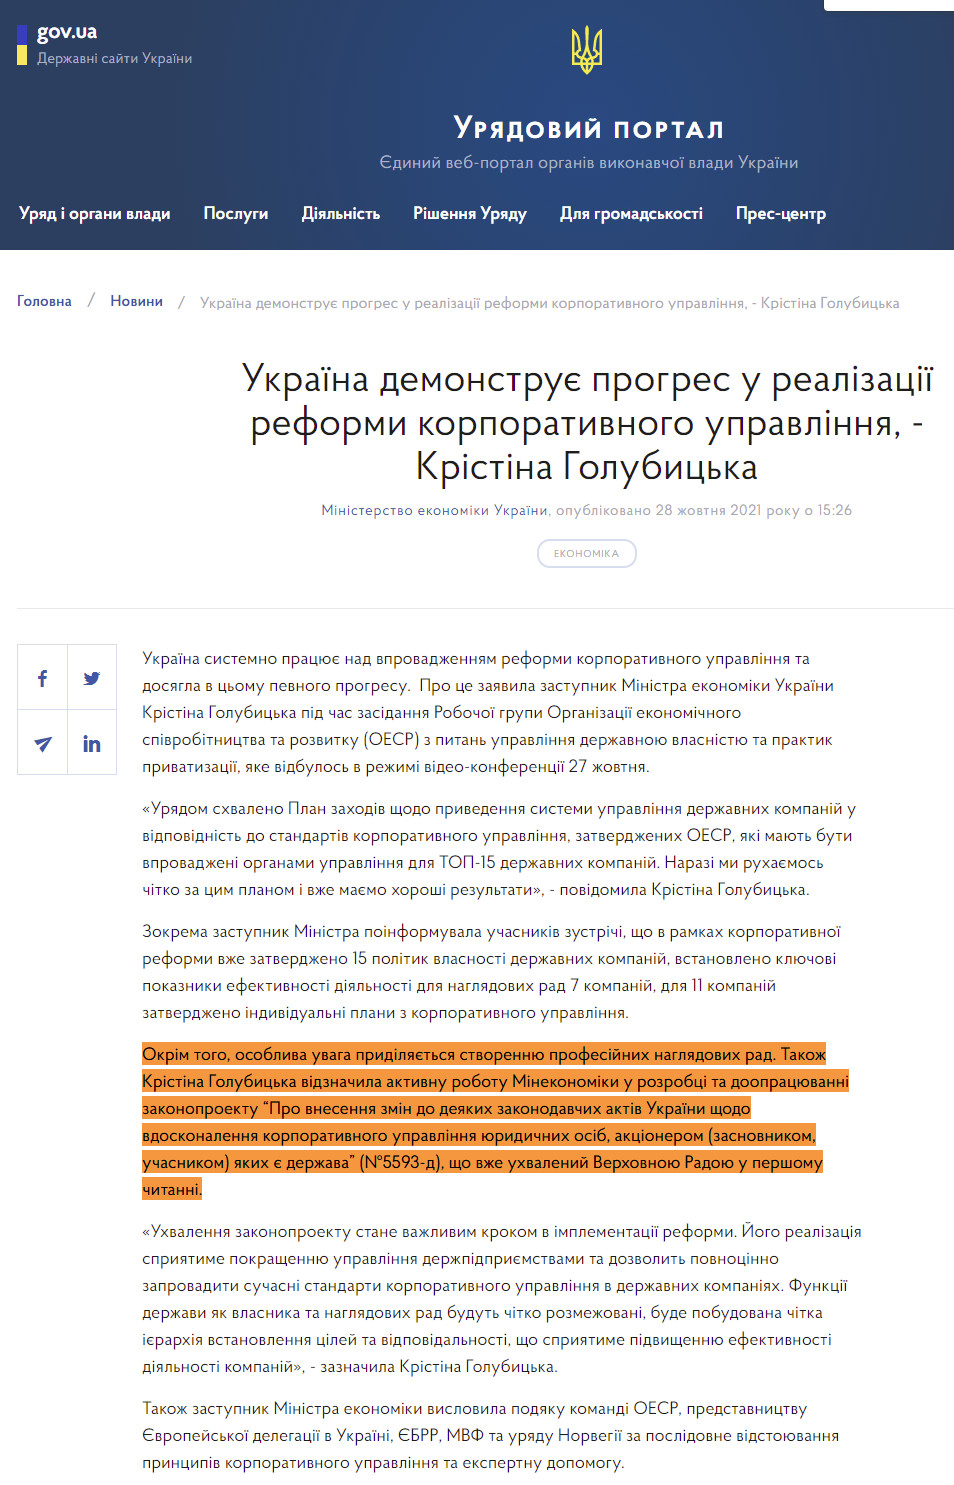 https://www.kmu.gov.ua/news/ukrayina-demonstruye-progres-u-realizaciyi-reformi-korporativnogo-upravlinnya-kristina-golubicka